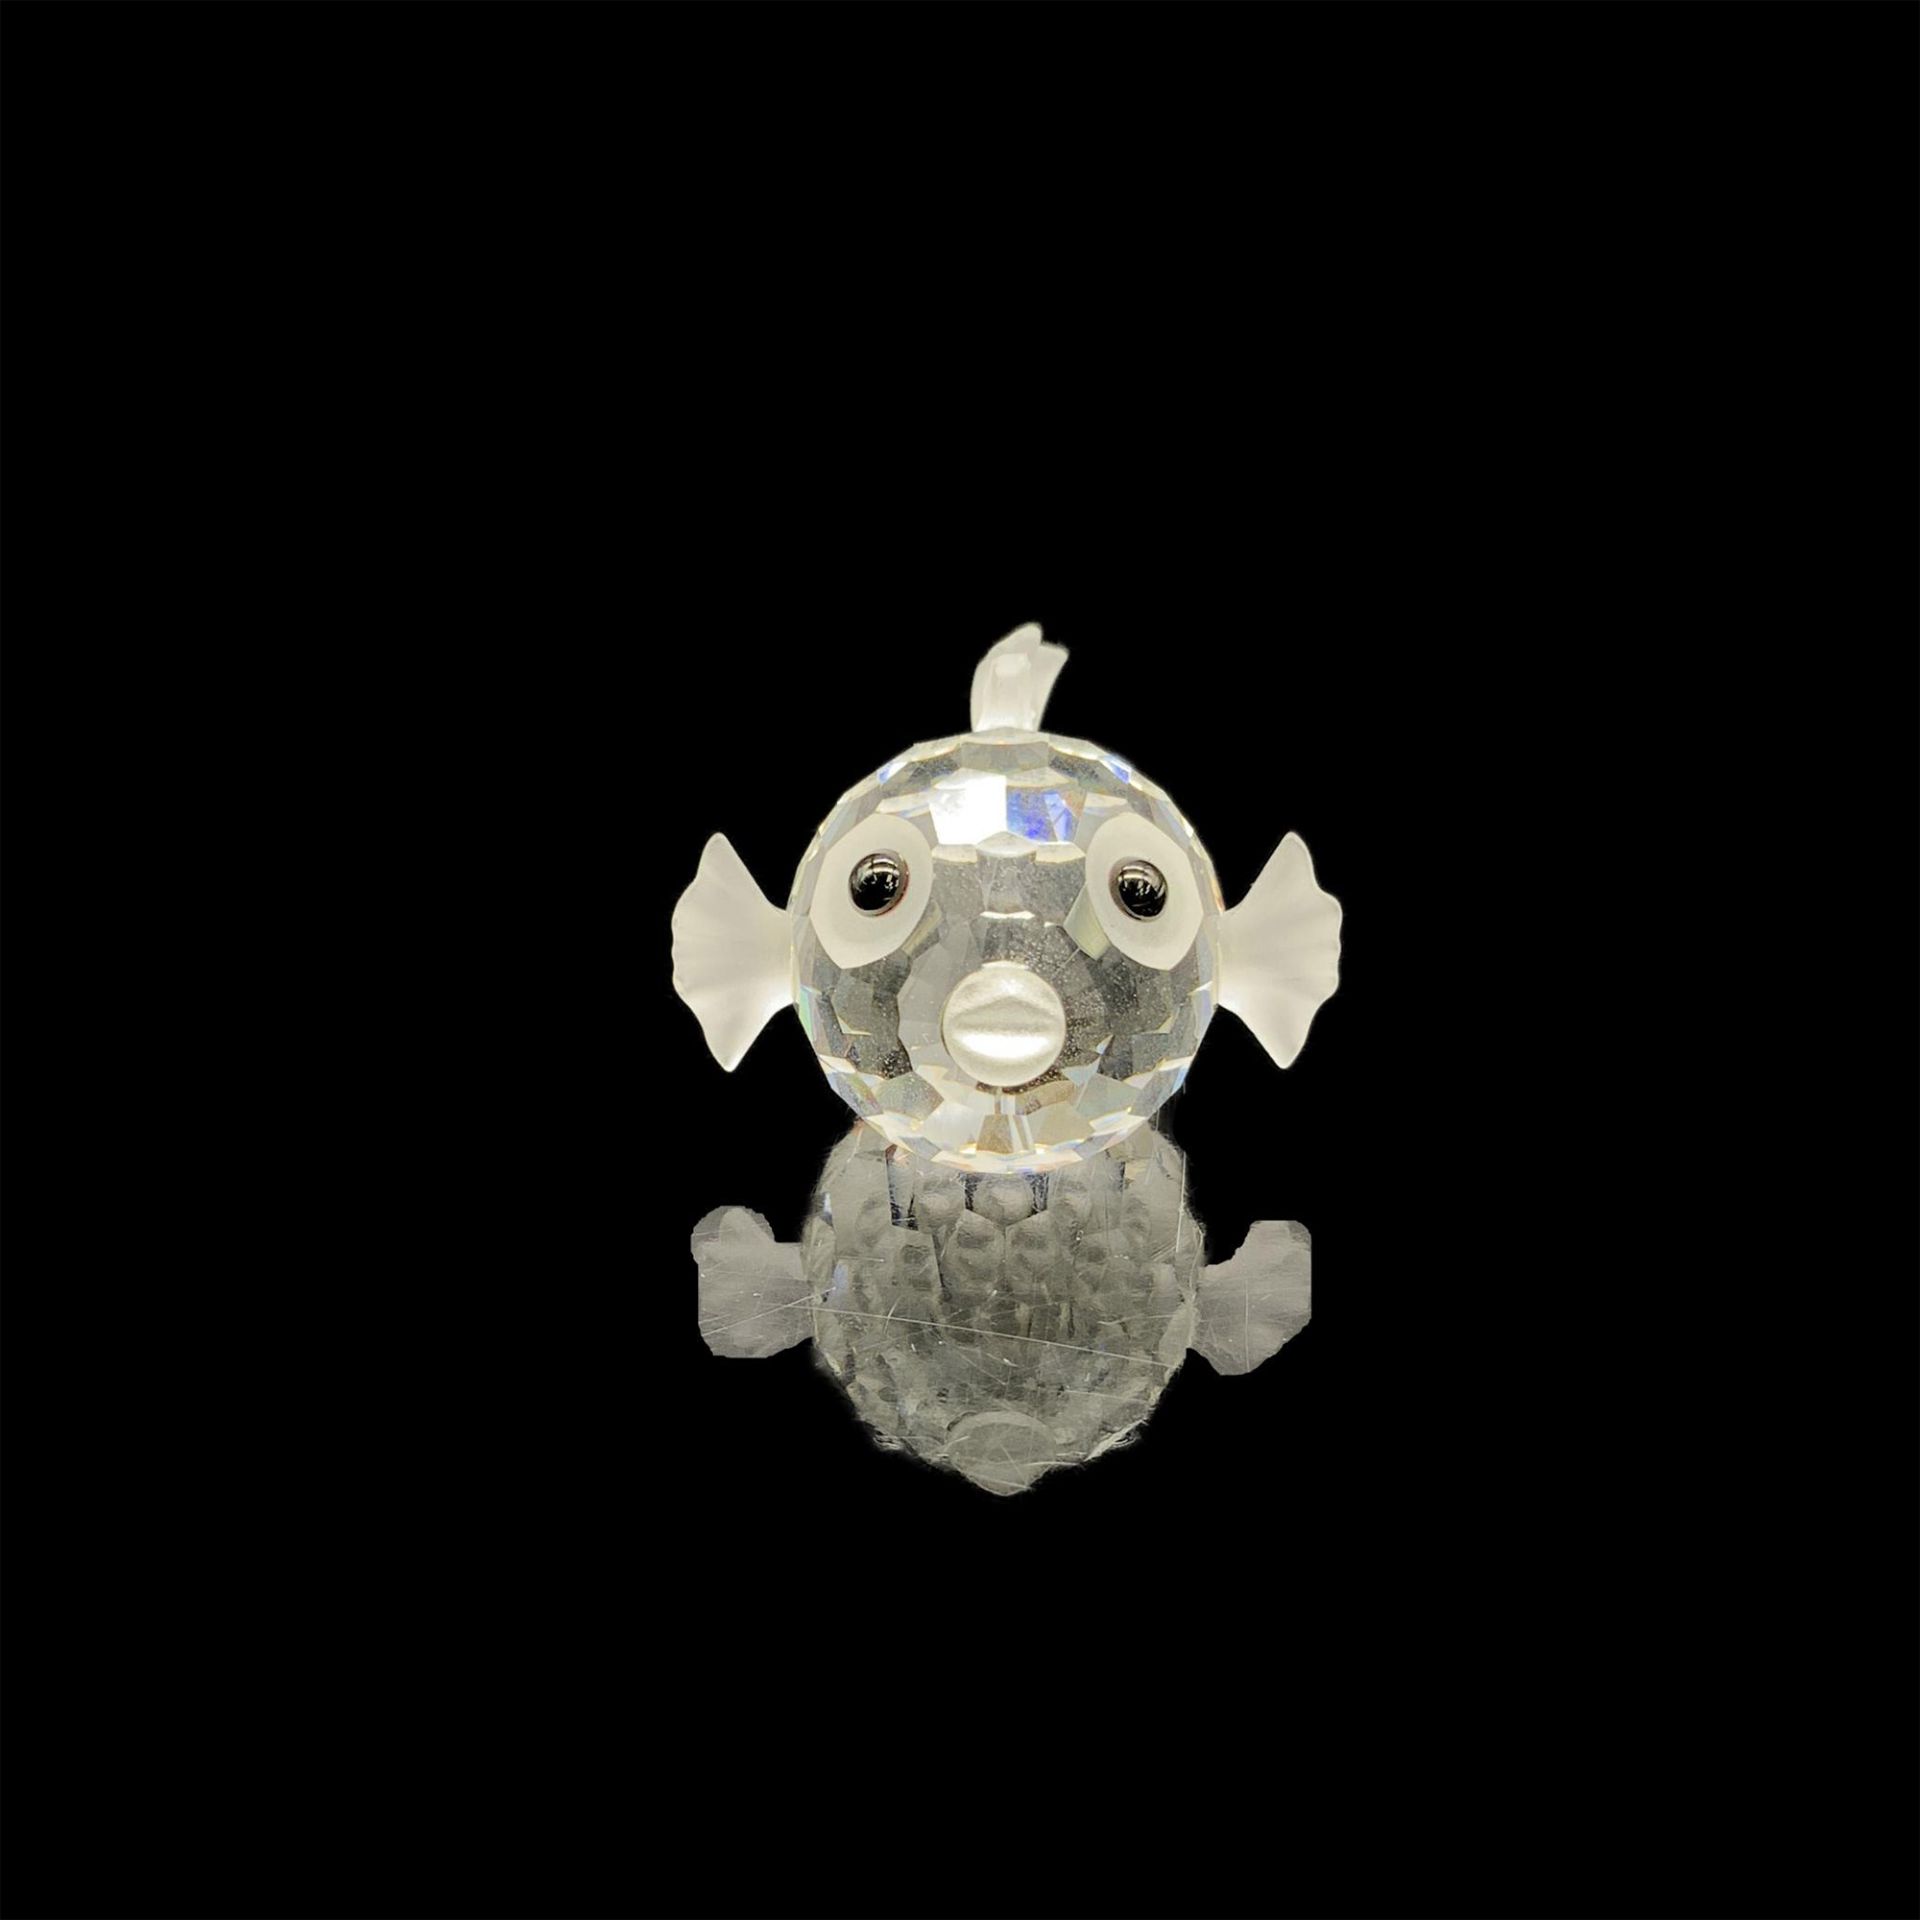 Swarovski Silver Crystal Figurine, Mini Blowfish 013960 - Image 2 of 3